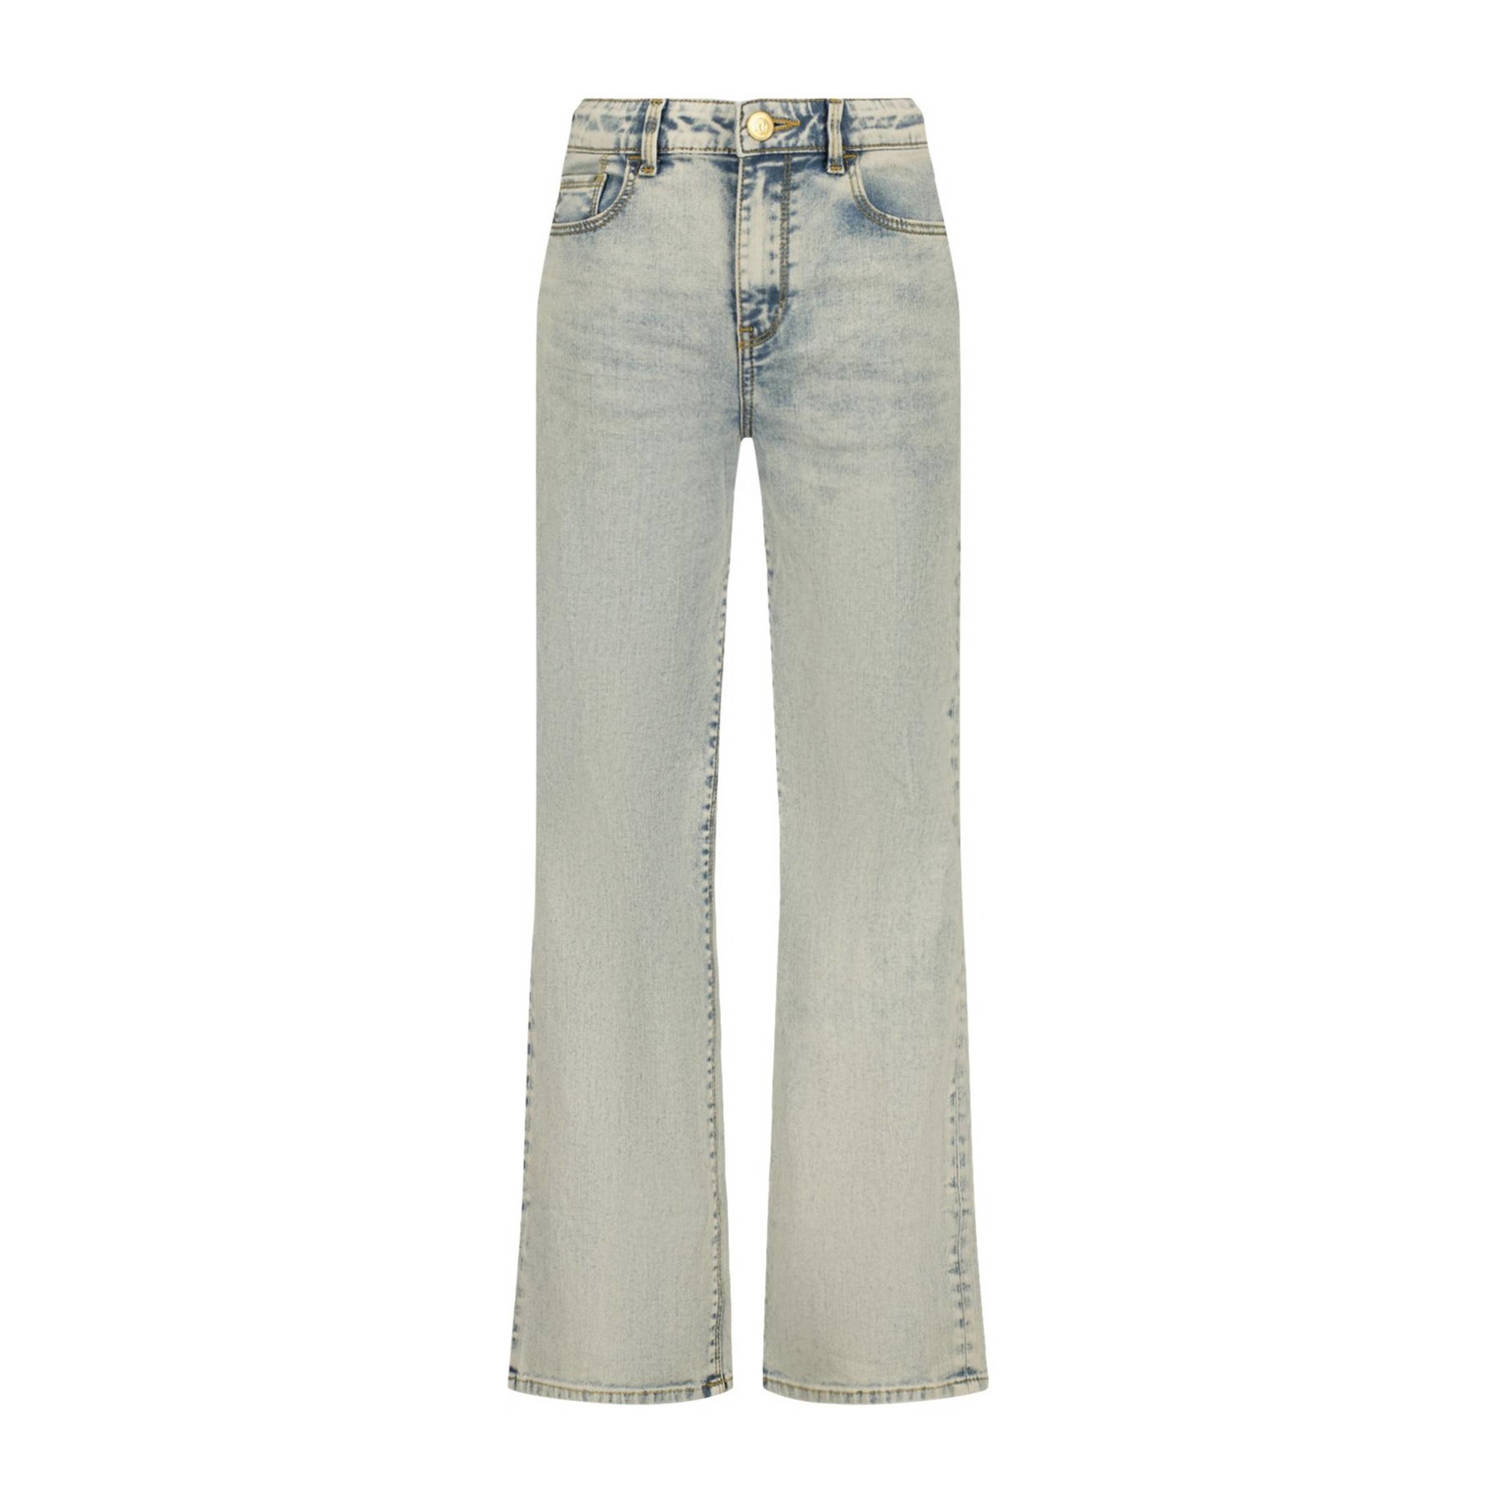 Raizzed wide leg jeans Mississippi light blue stone Blauw Meisjes Stretchdenim 170